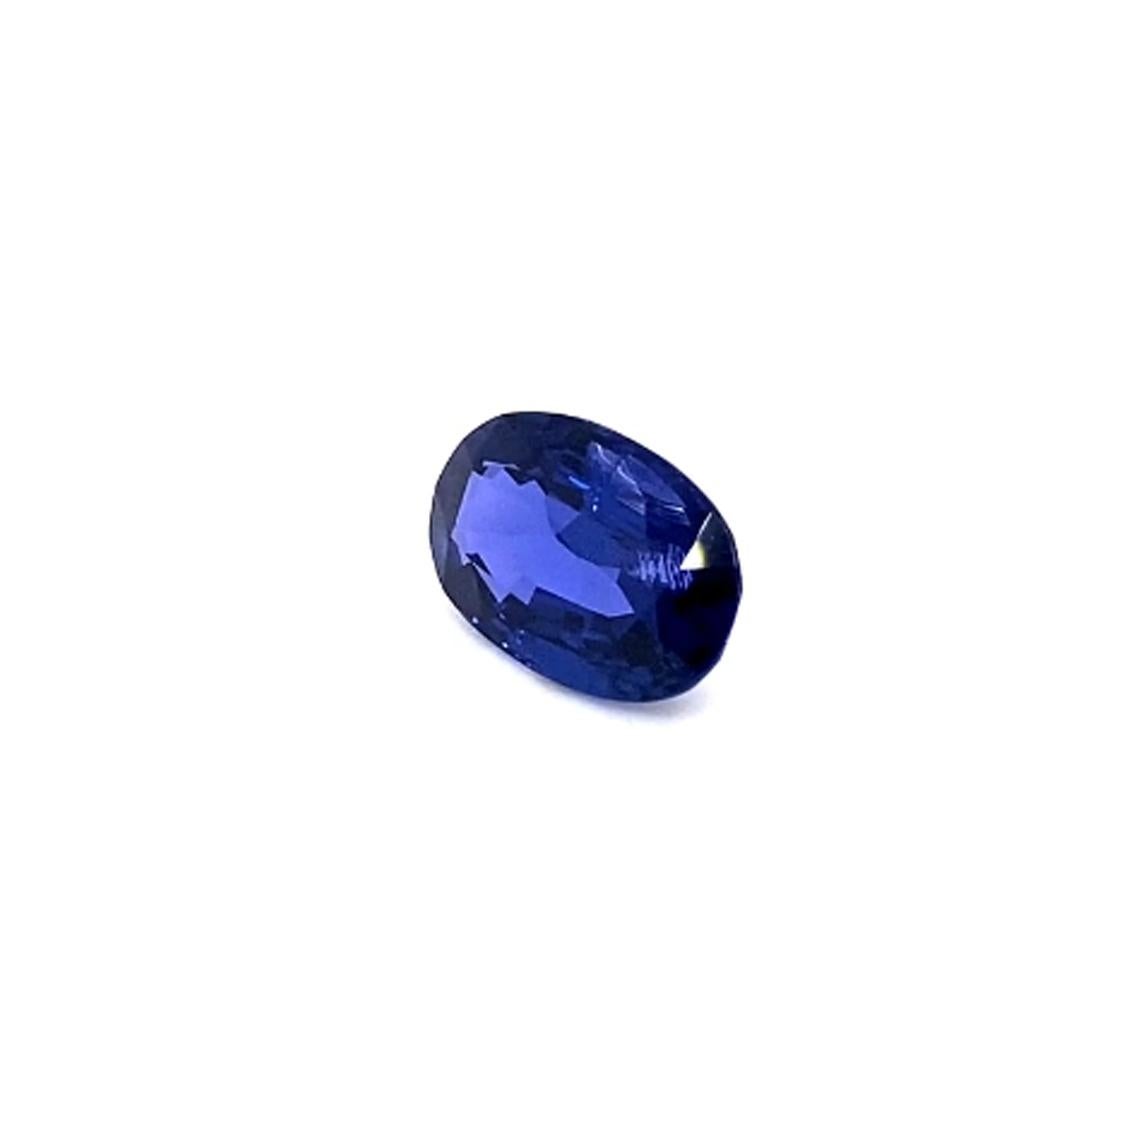 Women's or Men's Bellerophon Gemlab Certified 4.34ct Blue Sapphire Natural Gemstone For Sale